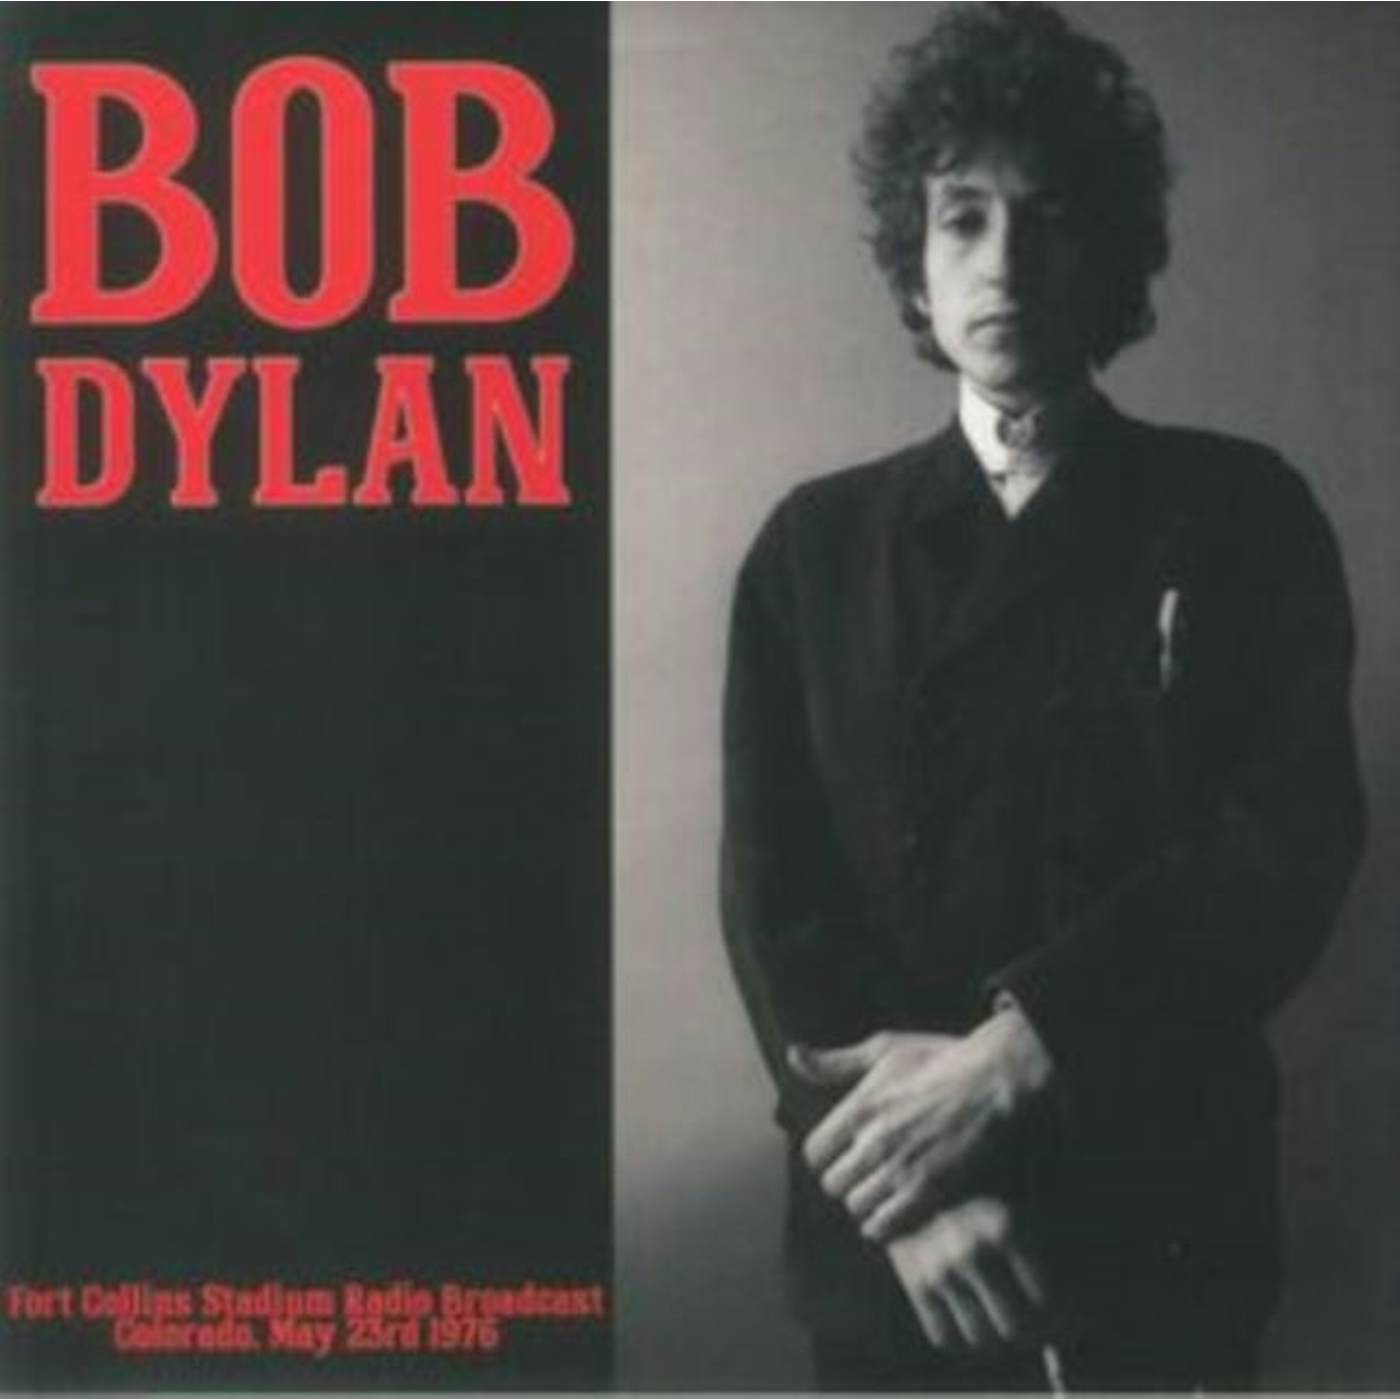 Bob Dylan LP - Fort Collins Stadium Radio Broadcast Colorado. May 23Rd 1976 (Vinyl)